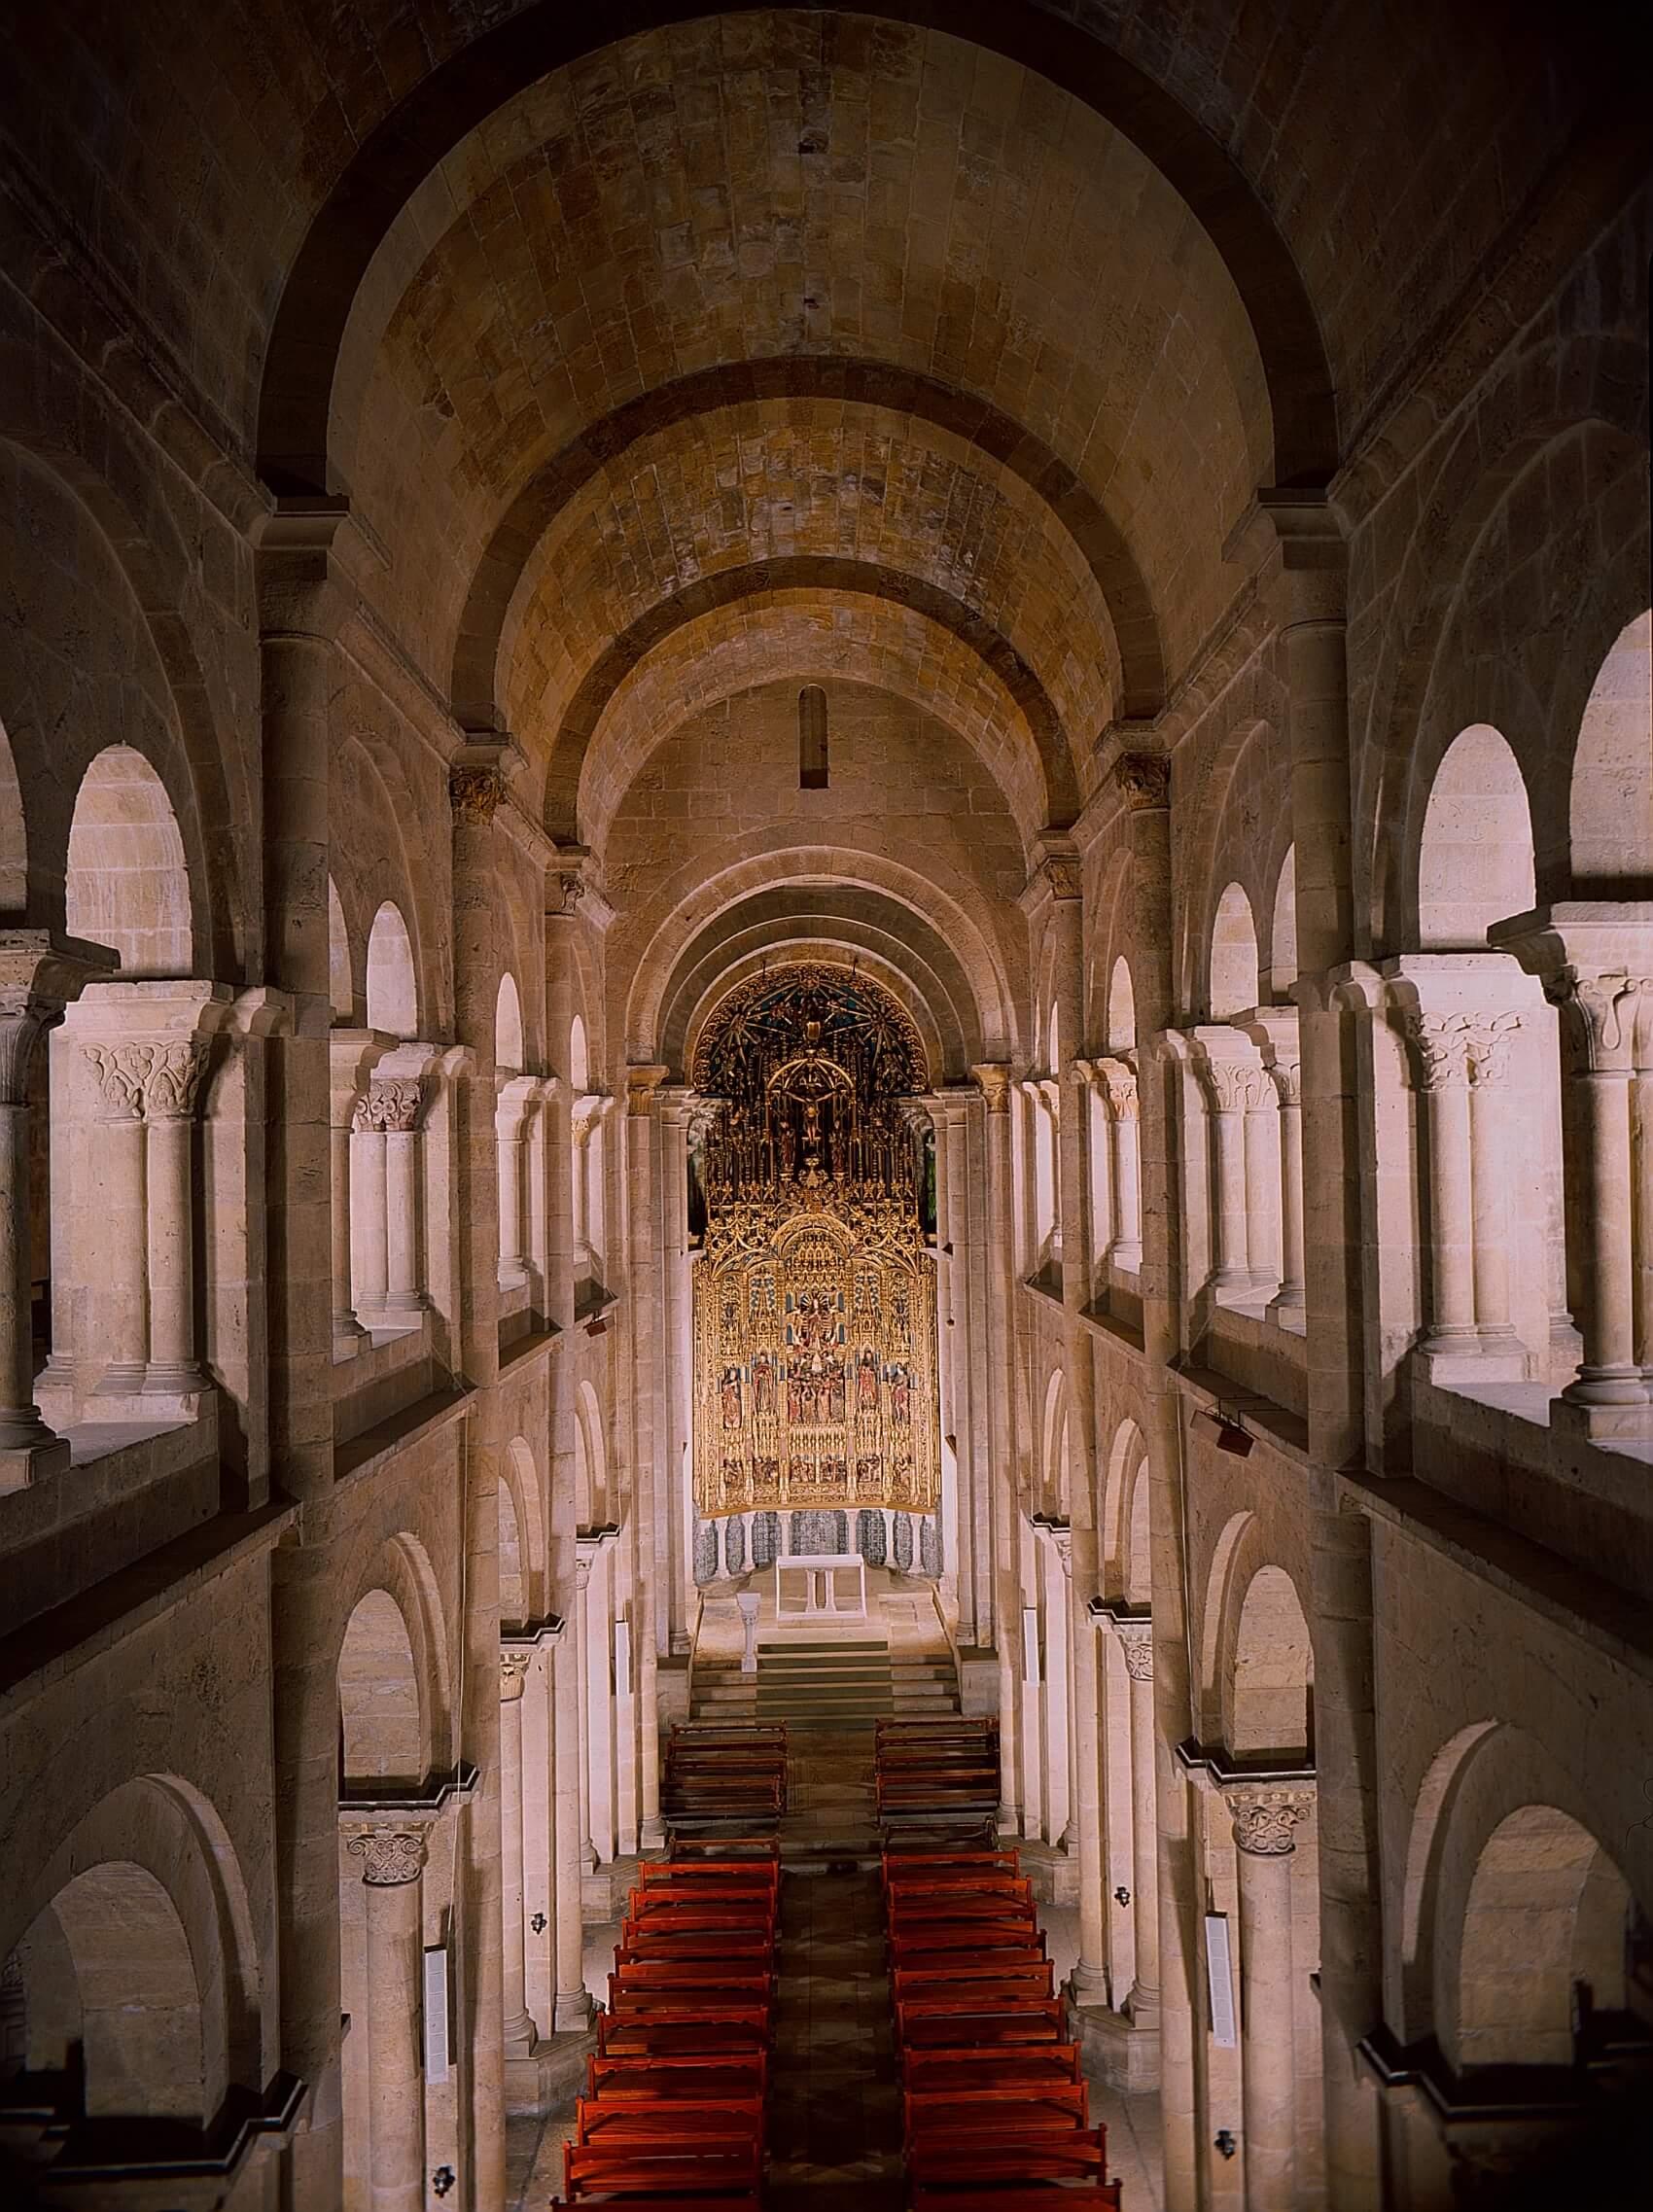 Turismo Centro de Portugal - Porto Surrounding With Coimbra Cultural Tour monastery inside 